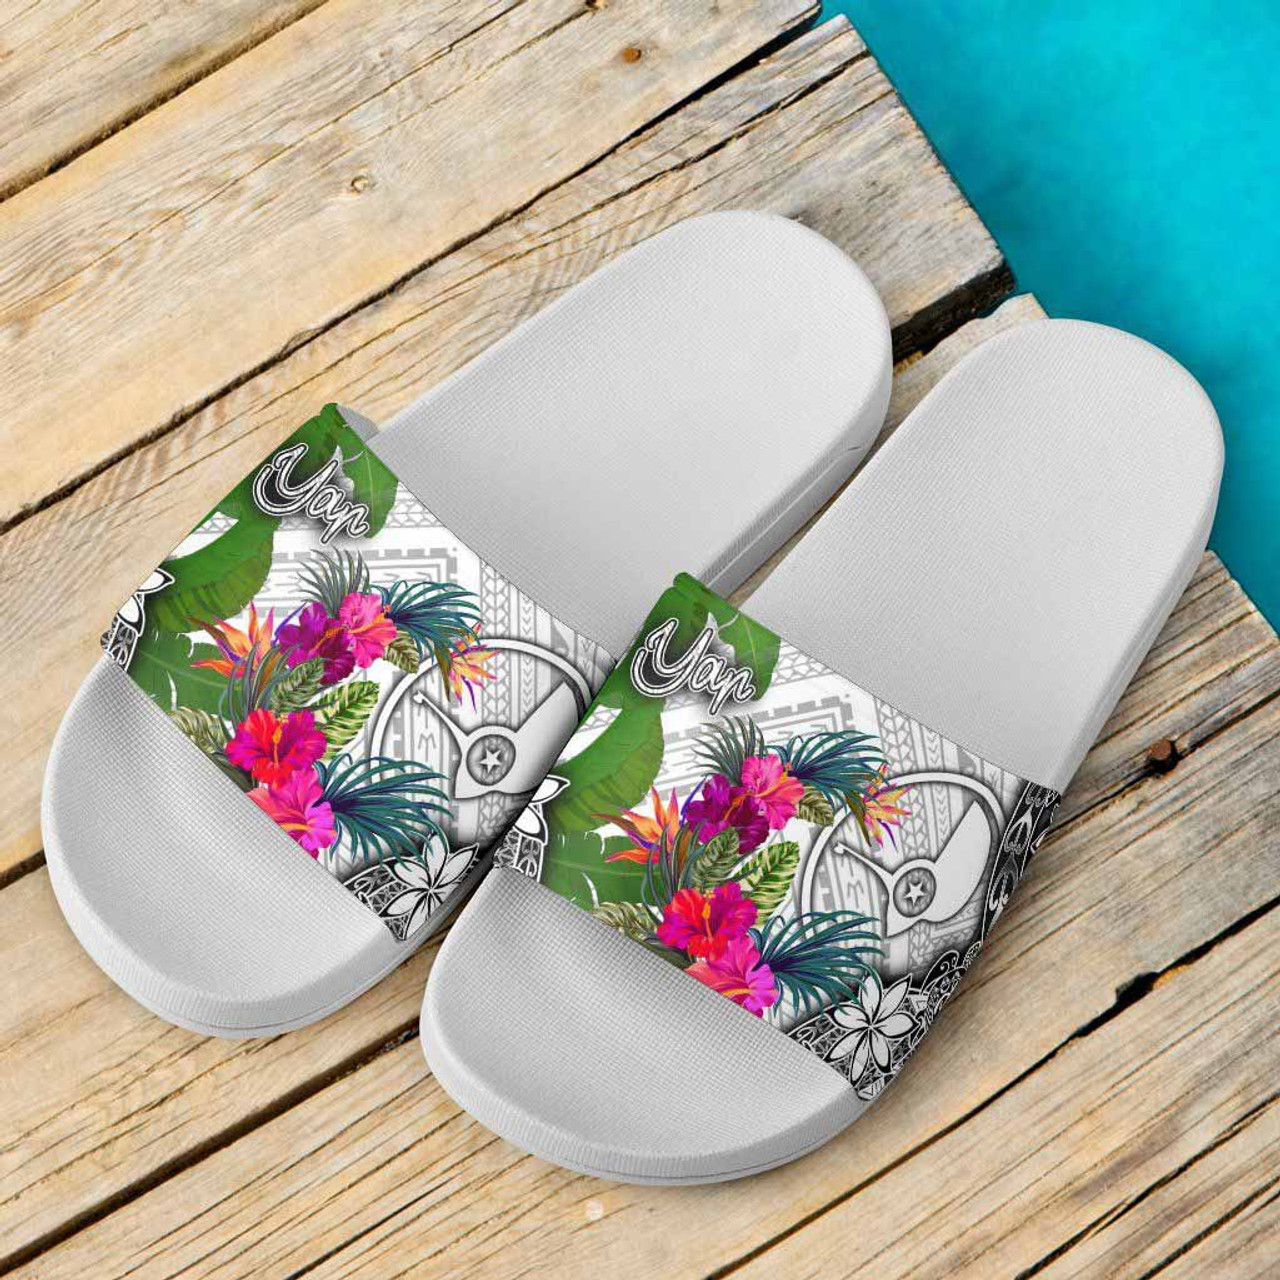 Yap Slide Sandals - Turtle Plumeria Banana Leaf 6